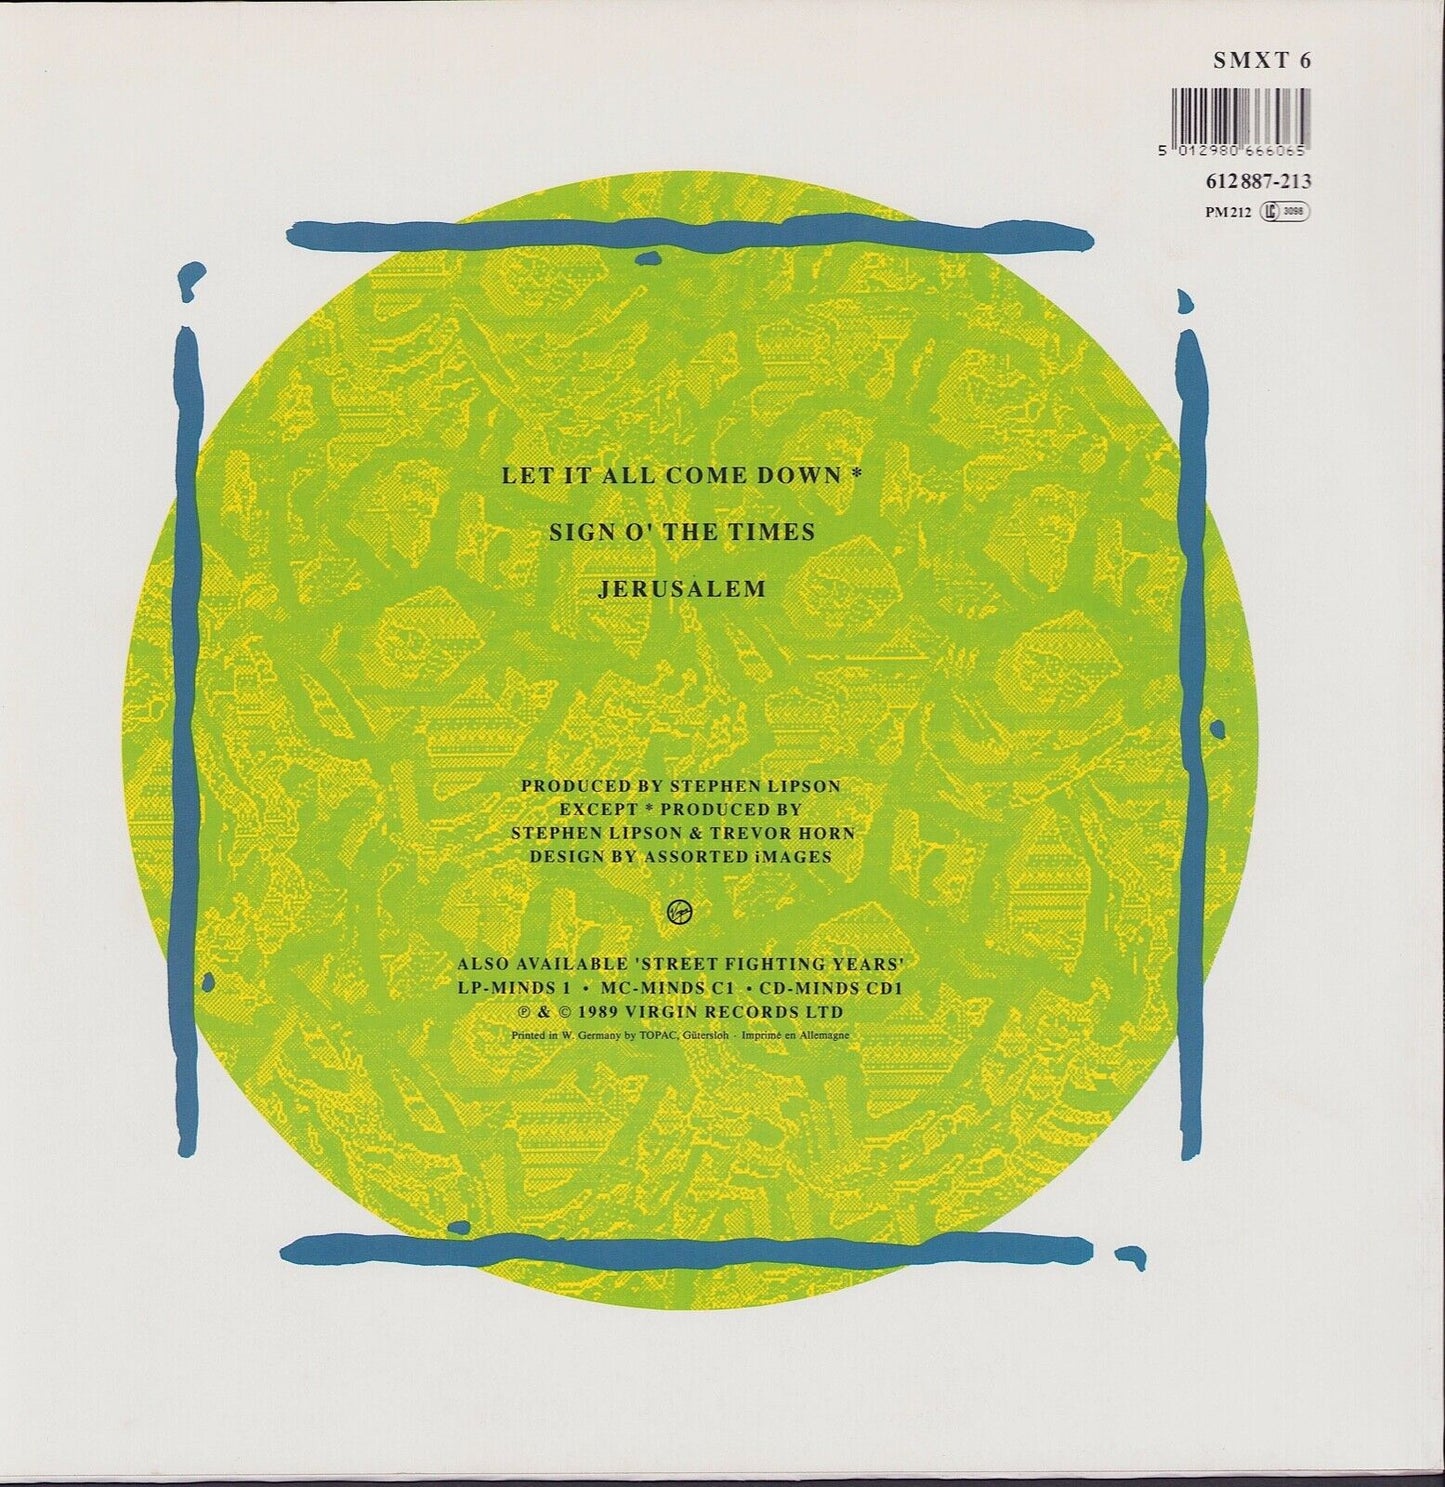 Simple Minds ‎- The Amsterdam Vinyl 12"